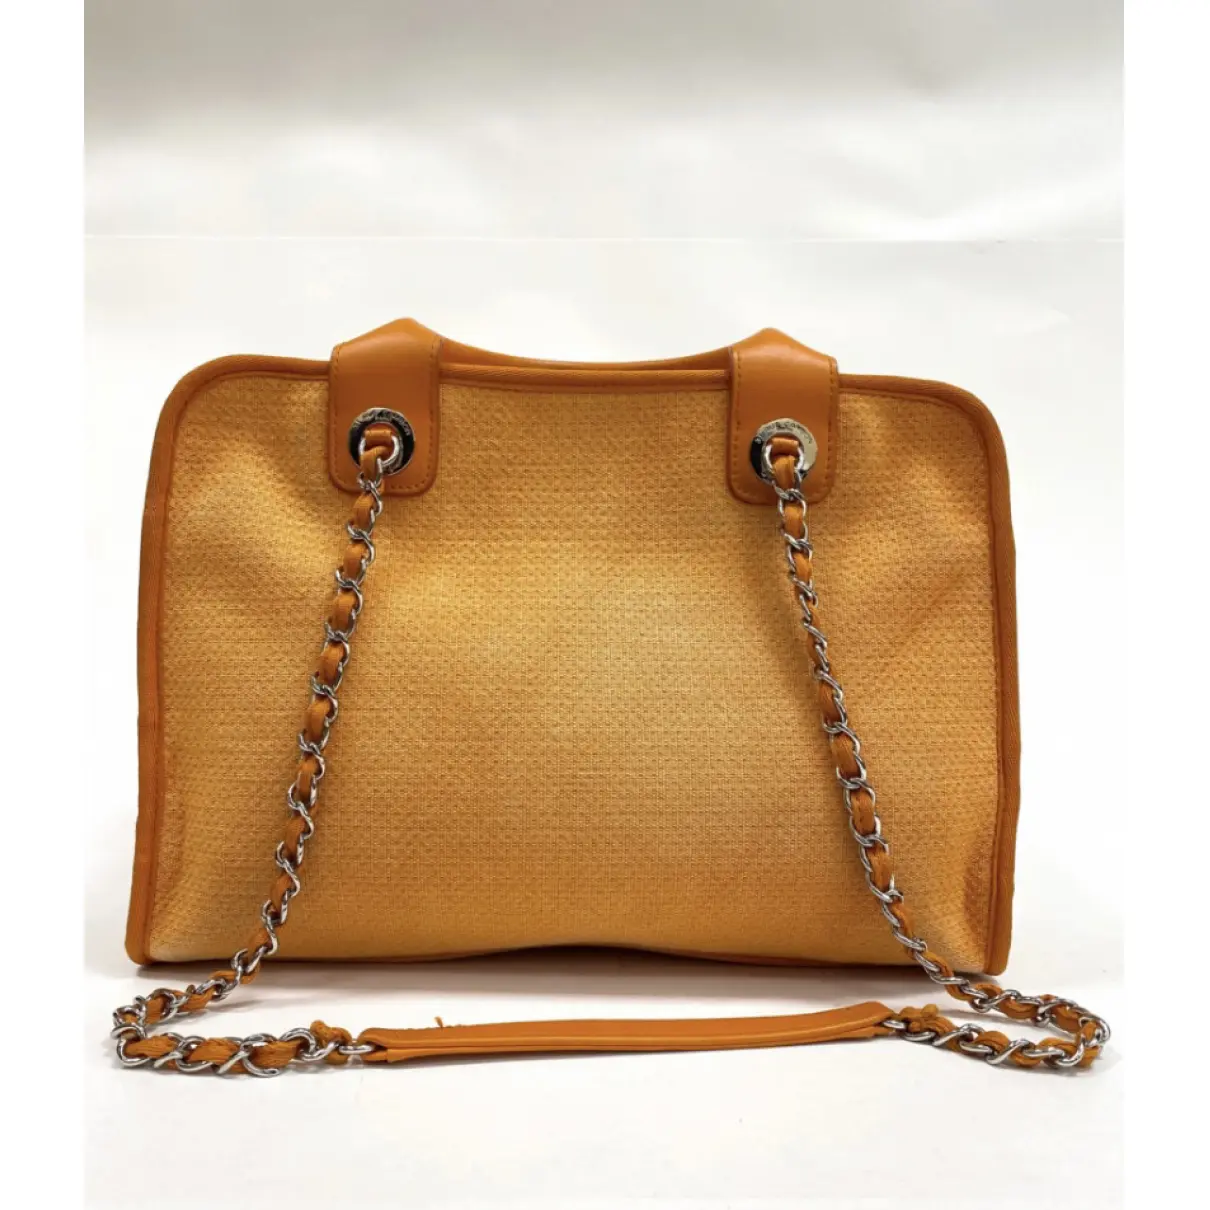 Buy Chanel Deauville handbag online